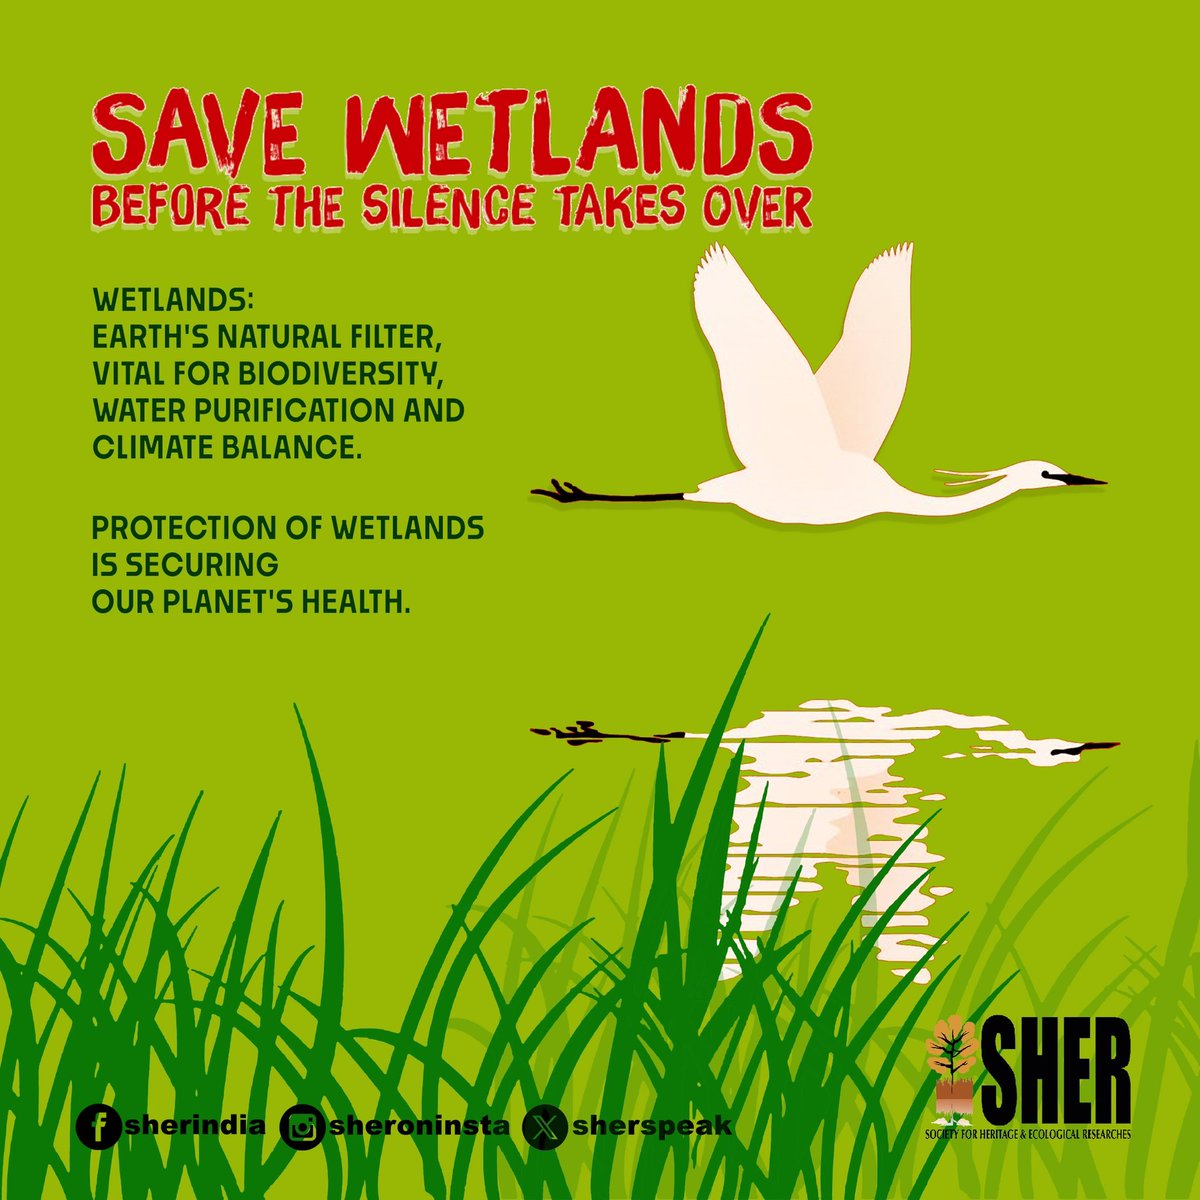 #wetlands #wetlandsday 

facebook.com/share/p/bb99H4…